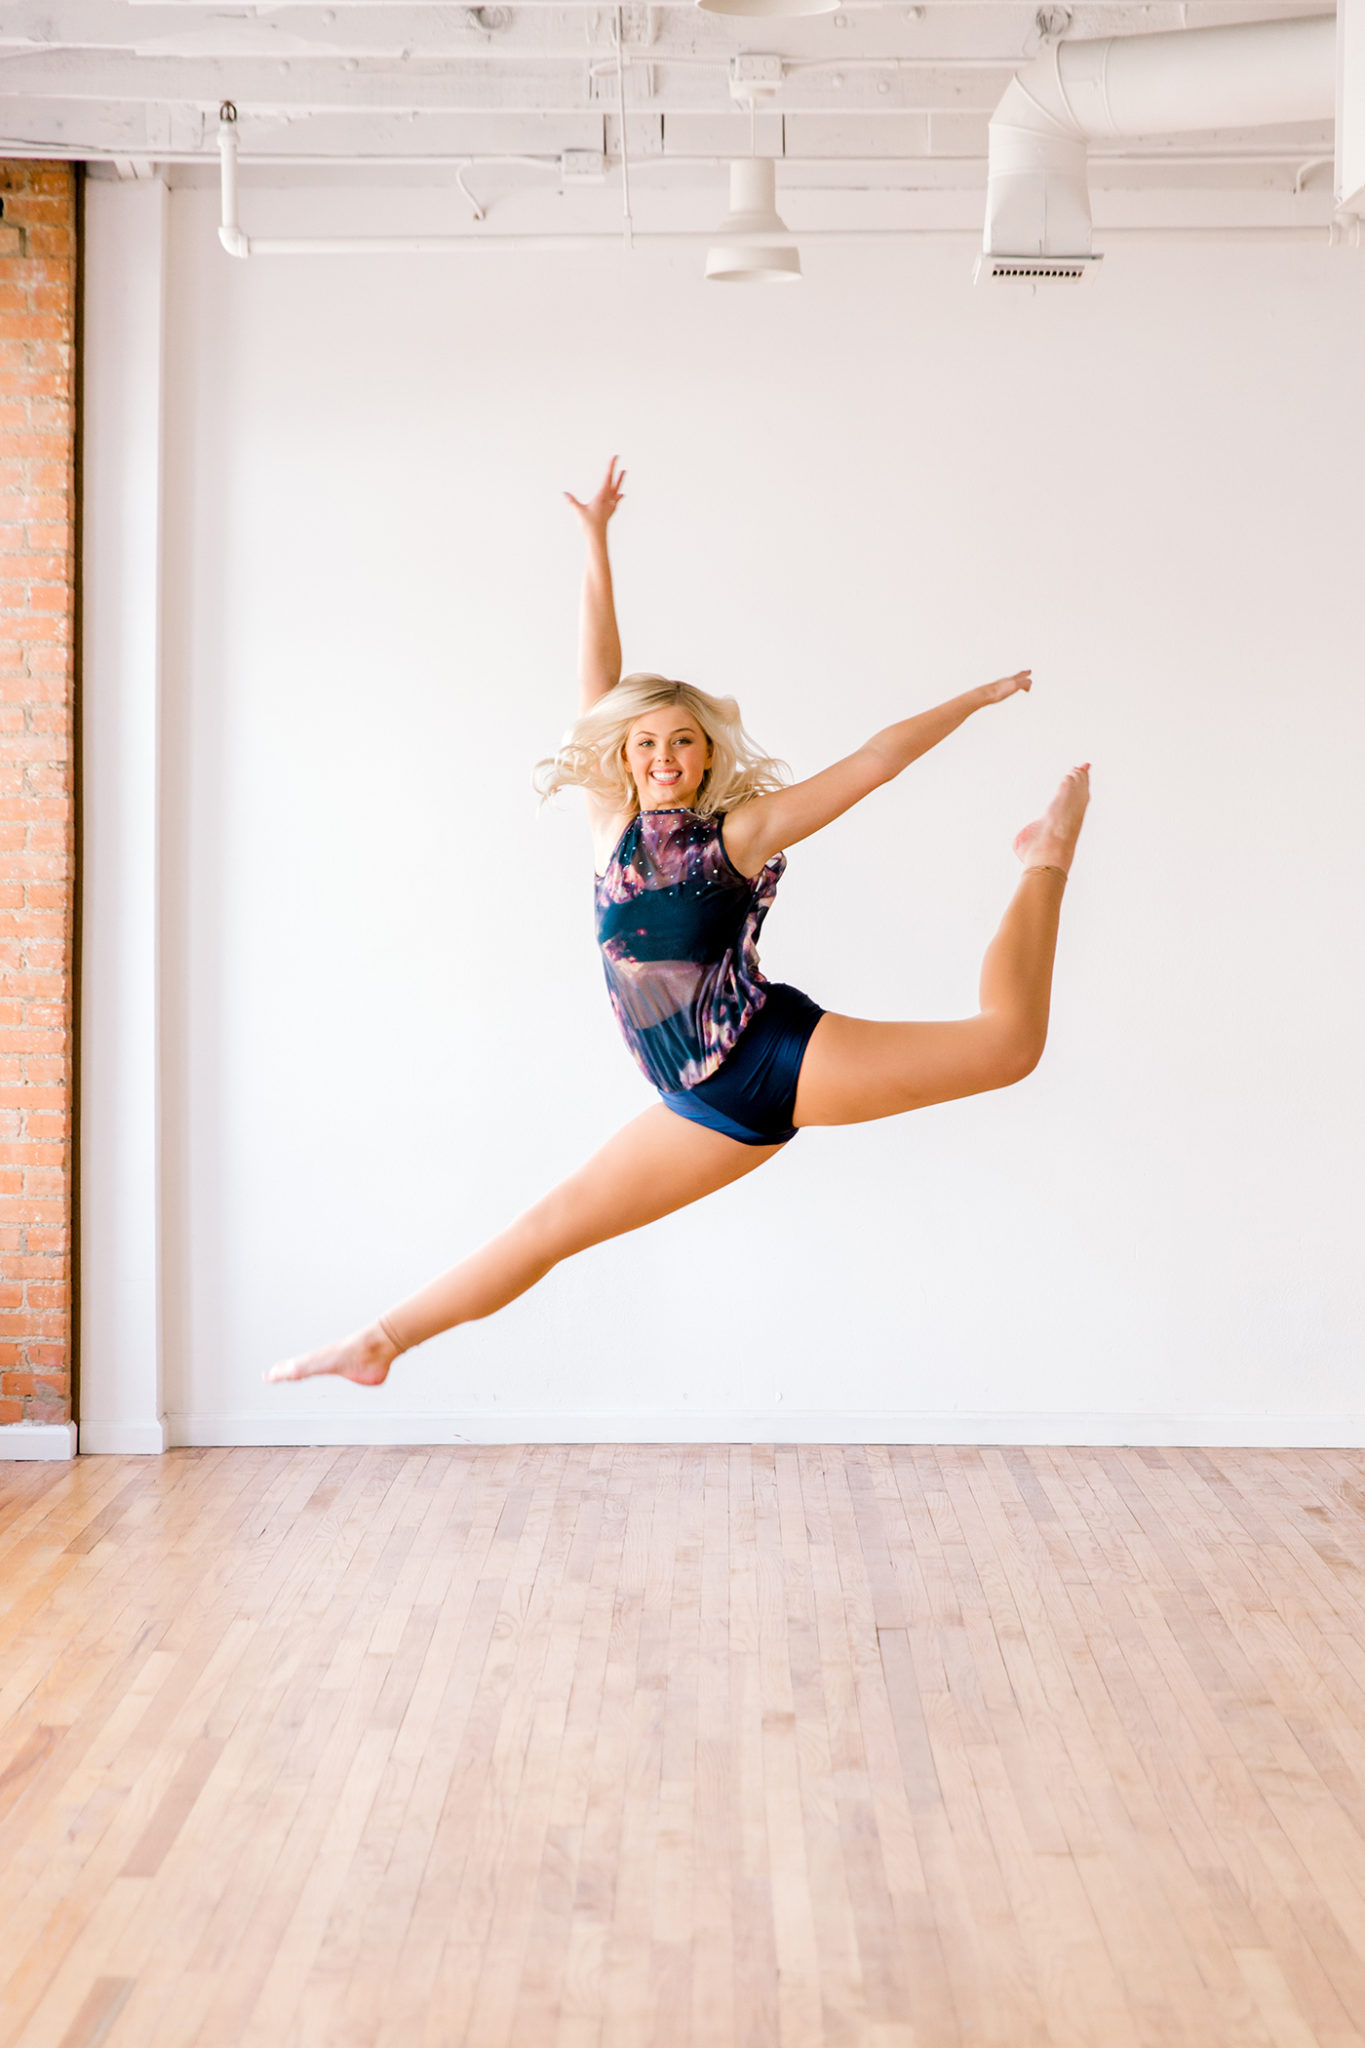 Senior Dance Photographer Dallas - Laylee Emadi Photography - DanceFX Studio Session